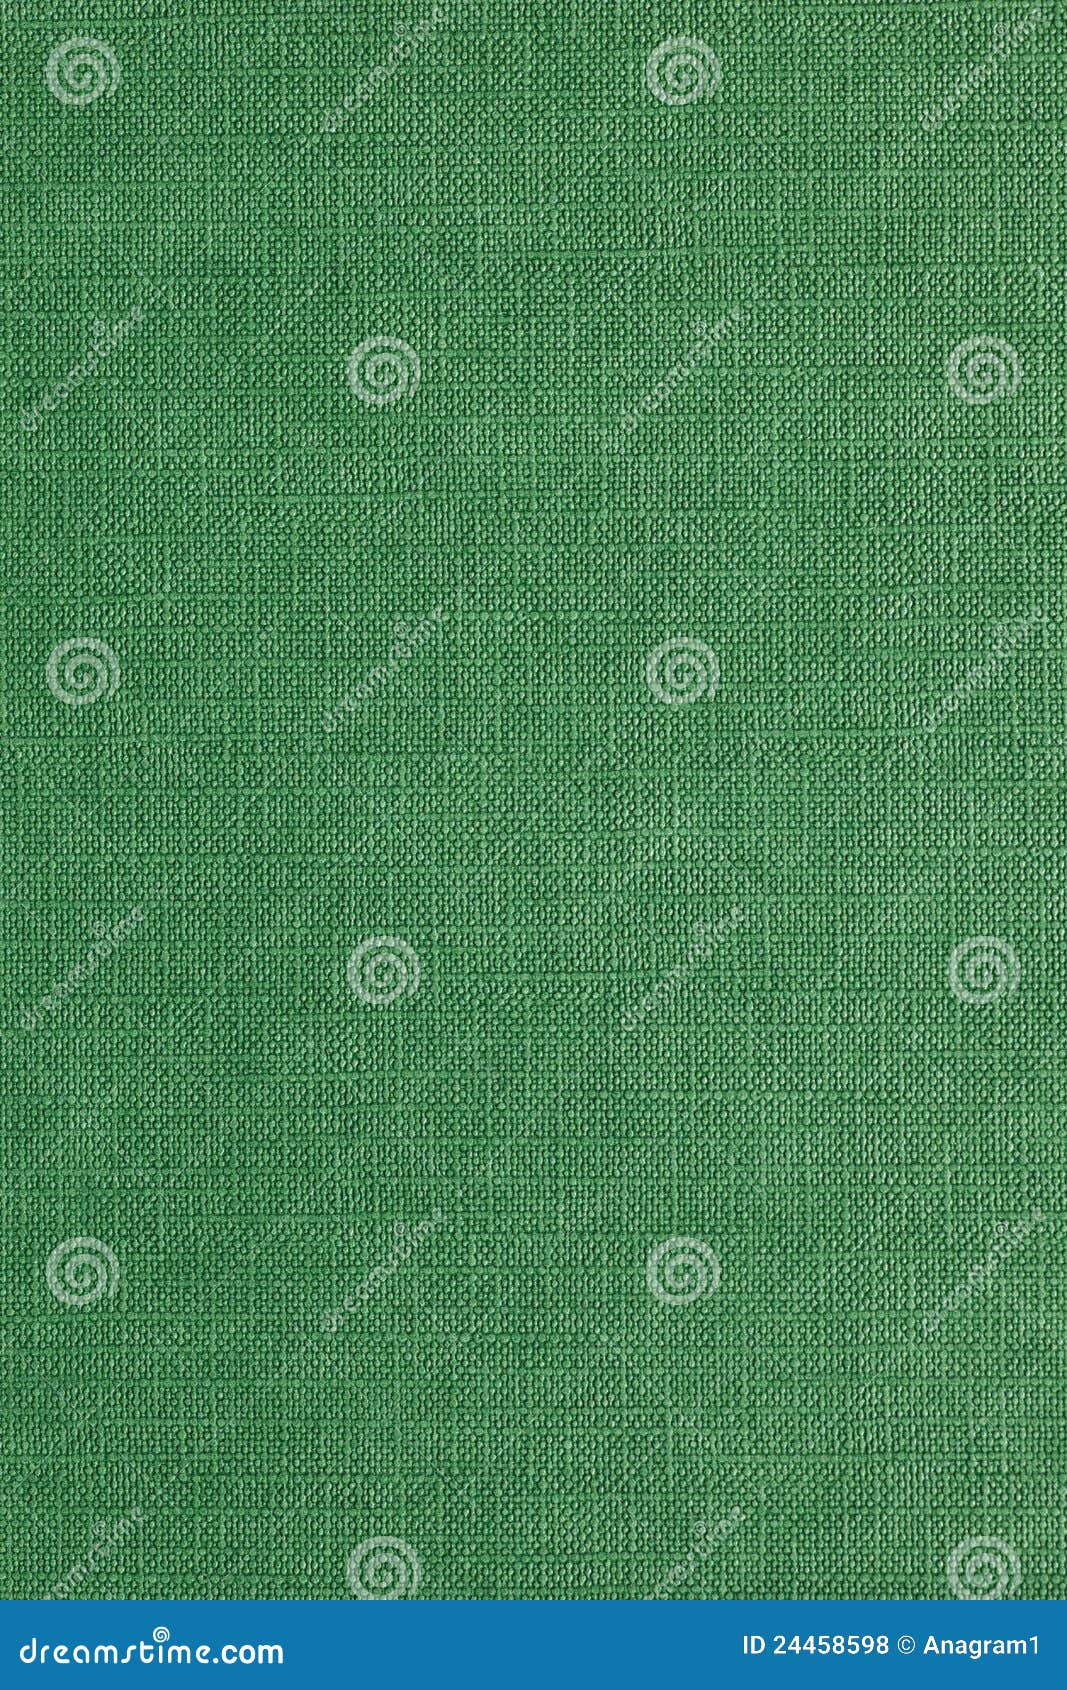 Green Linen Fabric Texture Background Stock Photo | CartoonDealer.com ...